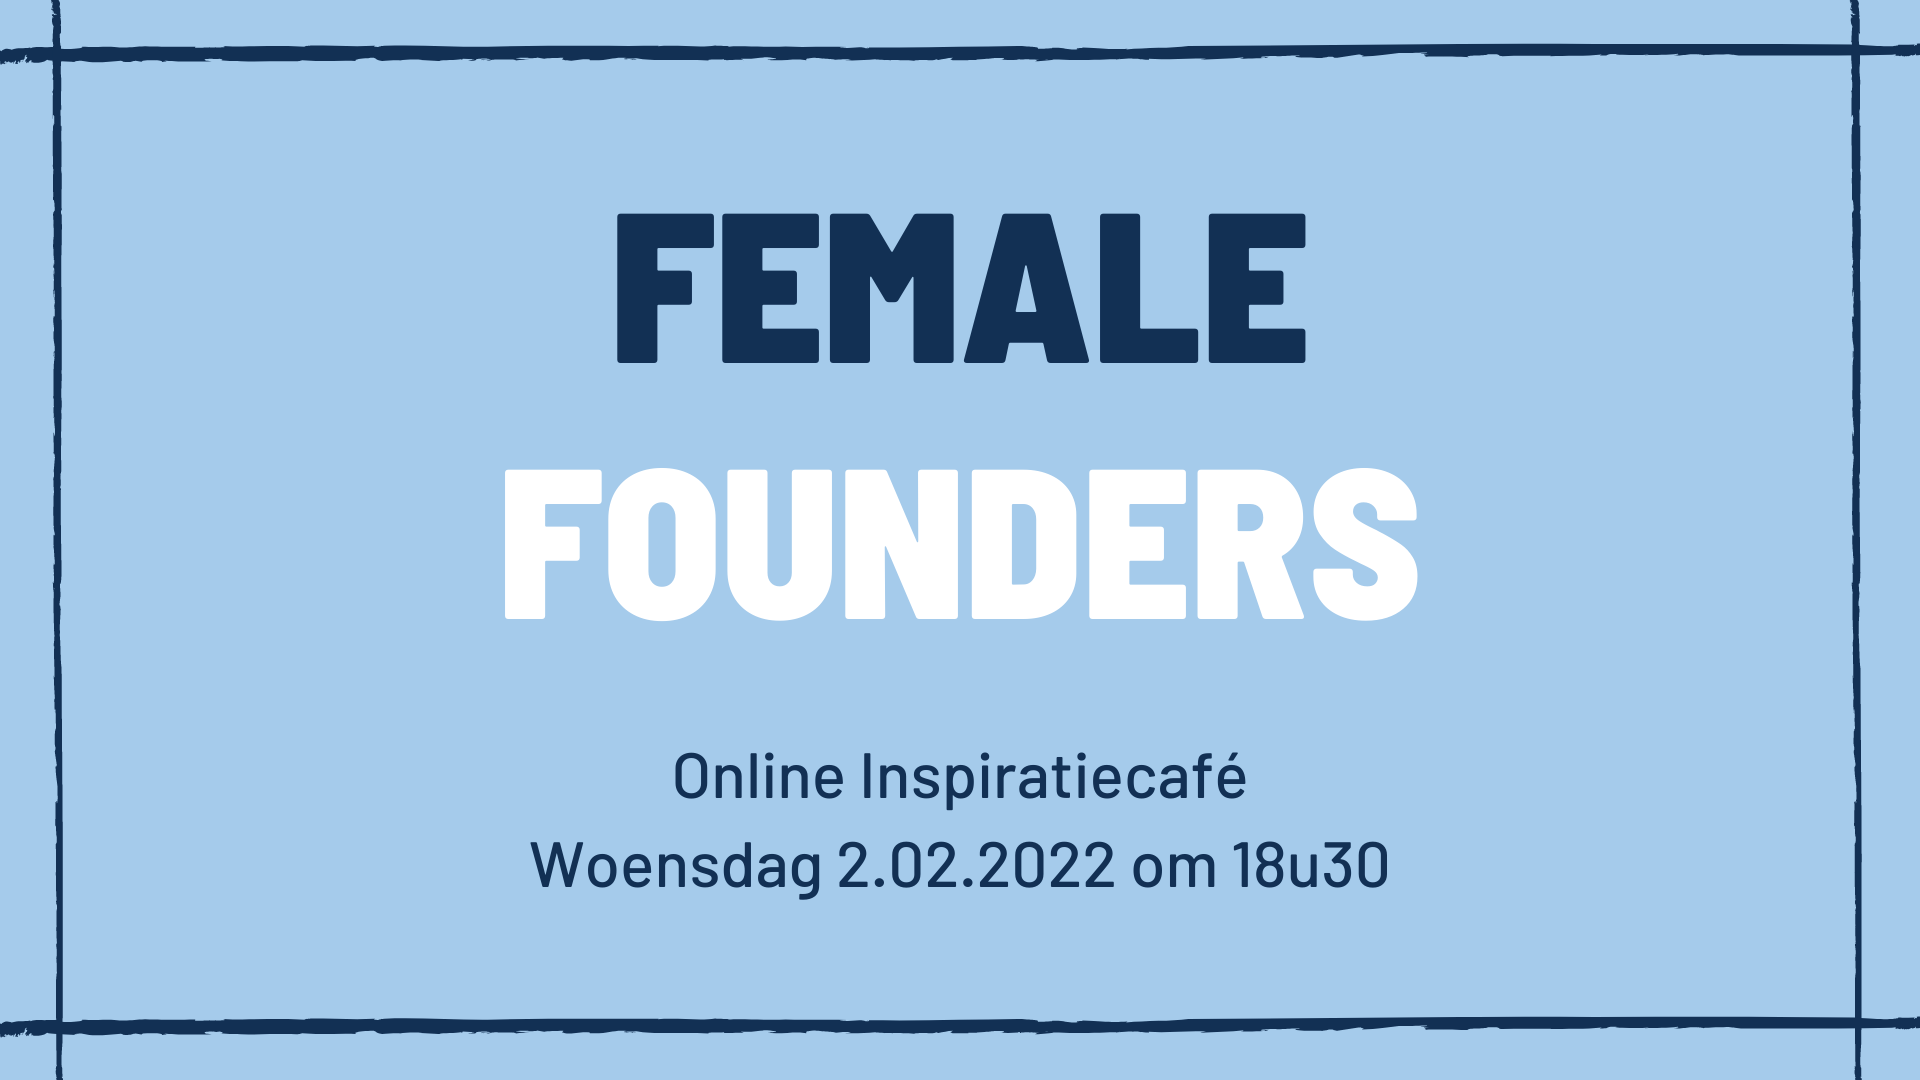 Omslagfoto Inspiratiecafé Female Founders